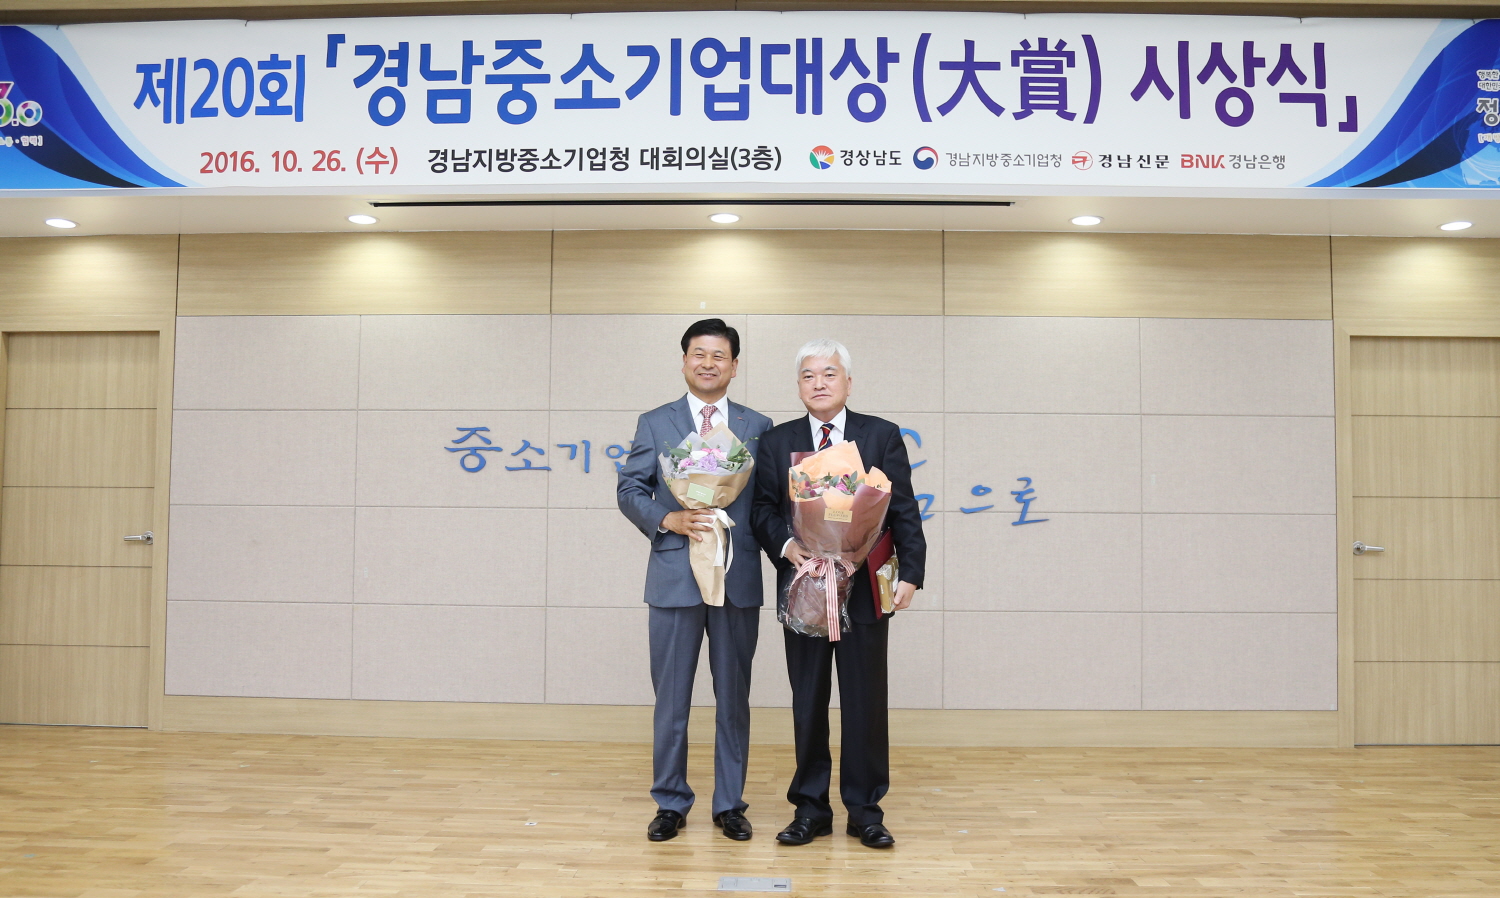 ▲ BNK경남은행 박양기 부행장(사진 왼쪽)이 ㈜제일종공 김주진 대표이사에게 기업인 부문 특별상을 시상한 후 기념촬영하고 있다.